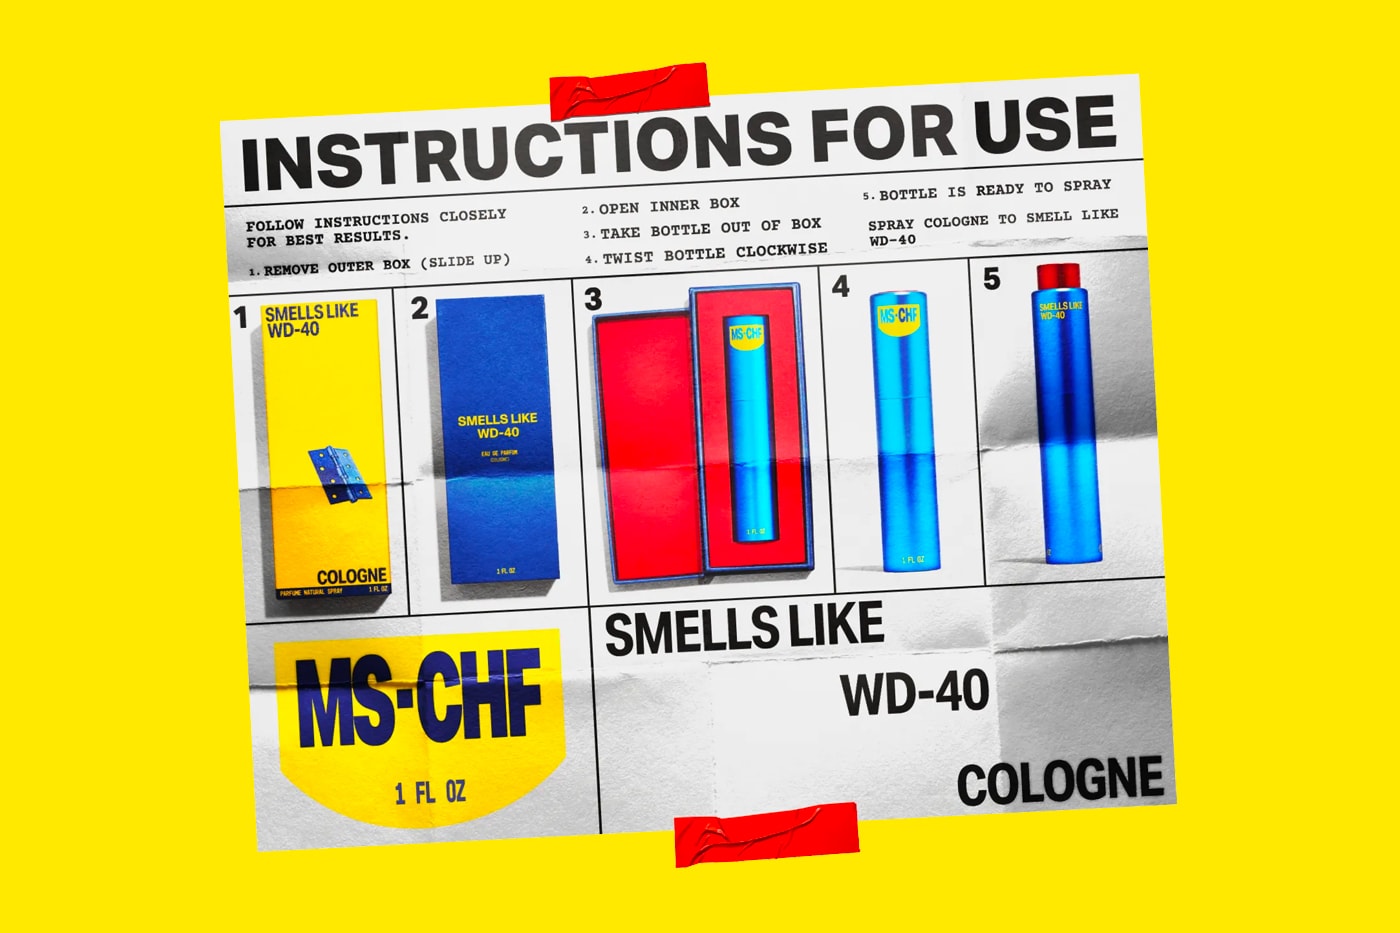 MSCHF WD 40 cologne casey neistat smells like release info 